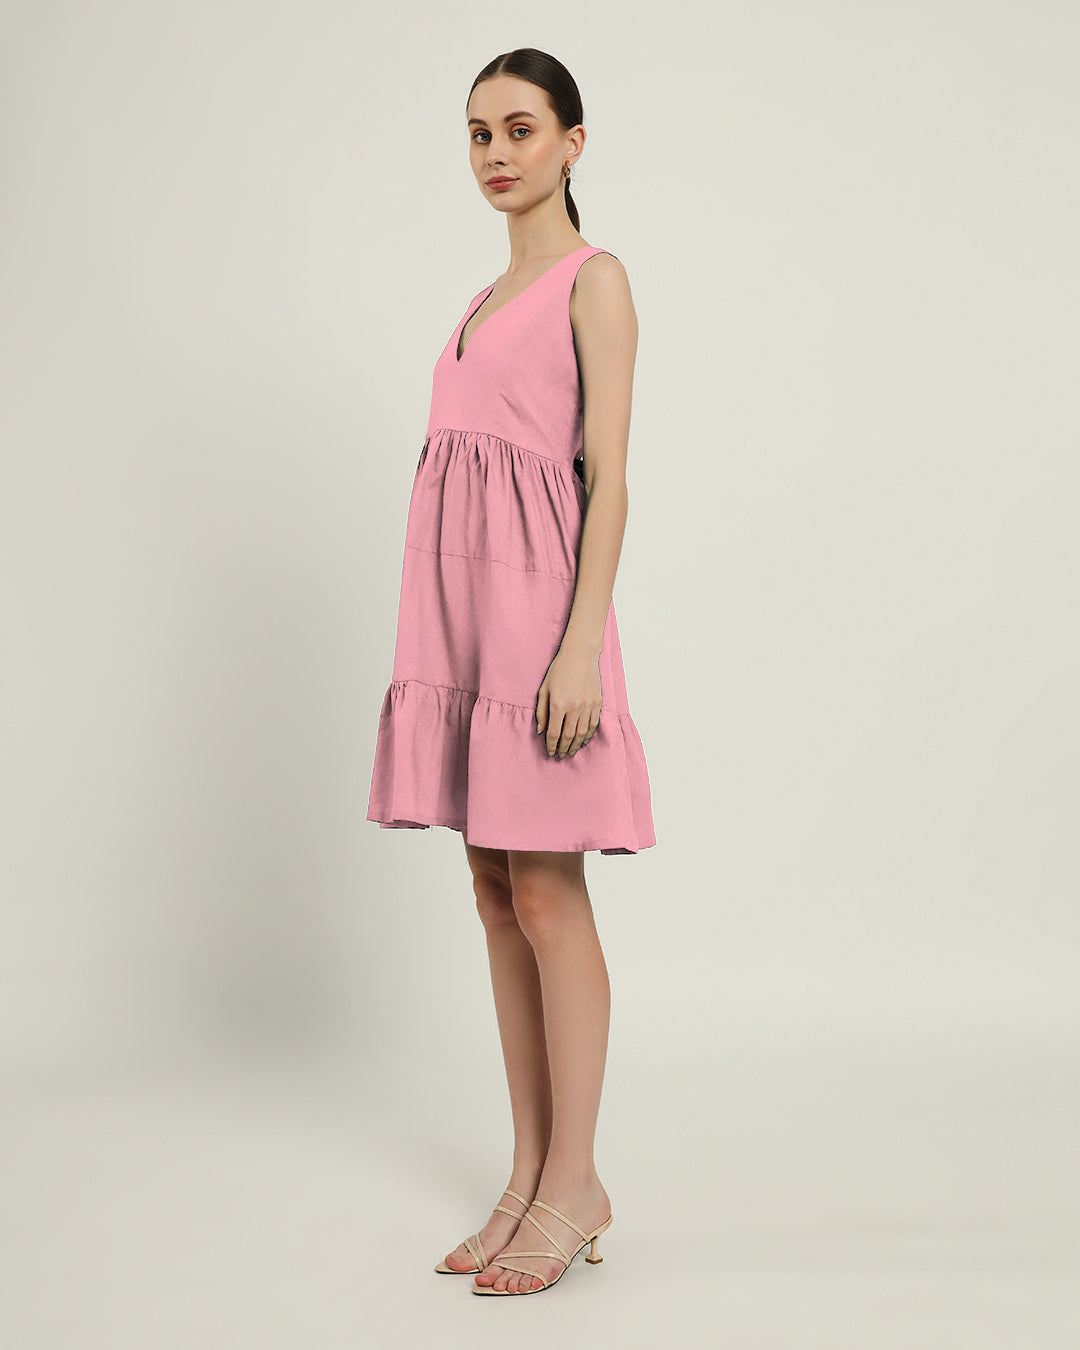 The Minsk Fondant Pink Cotton Dress